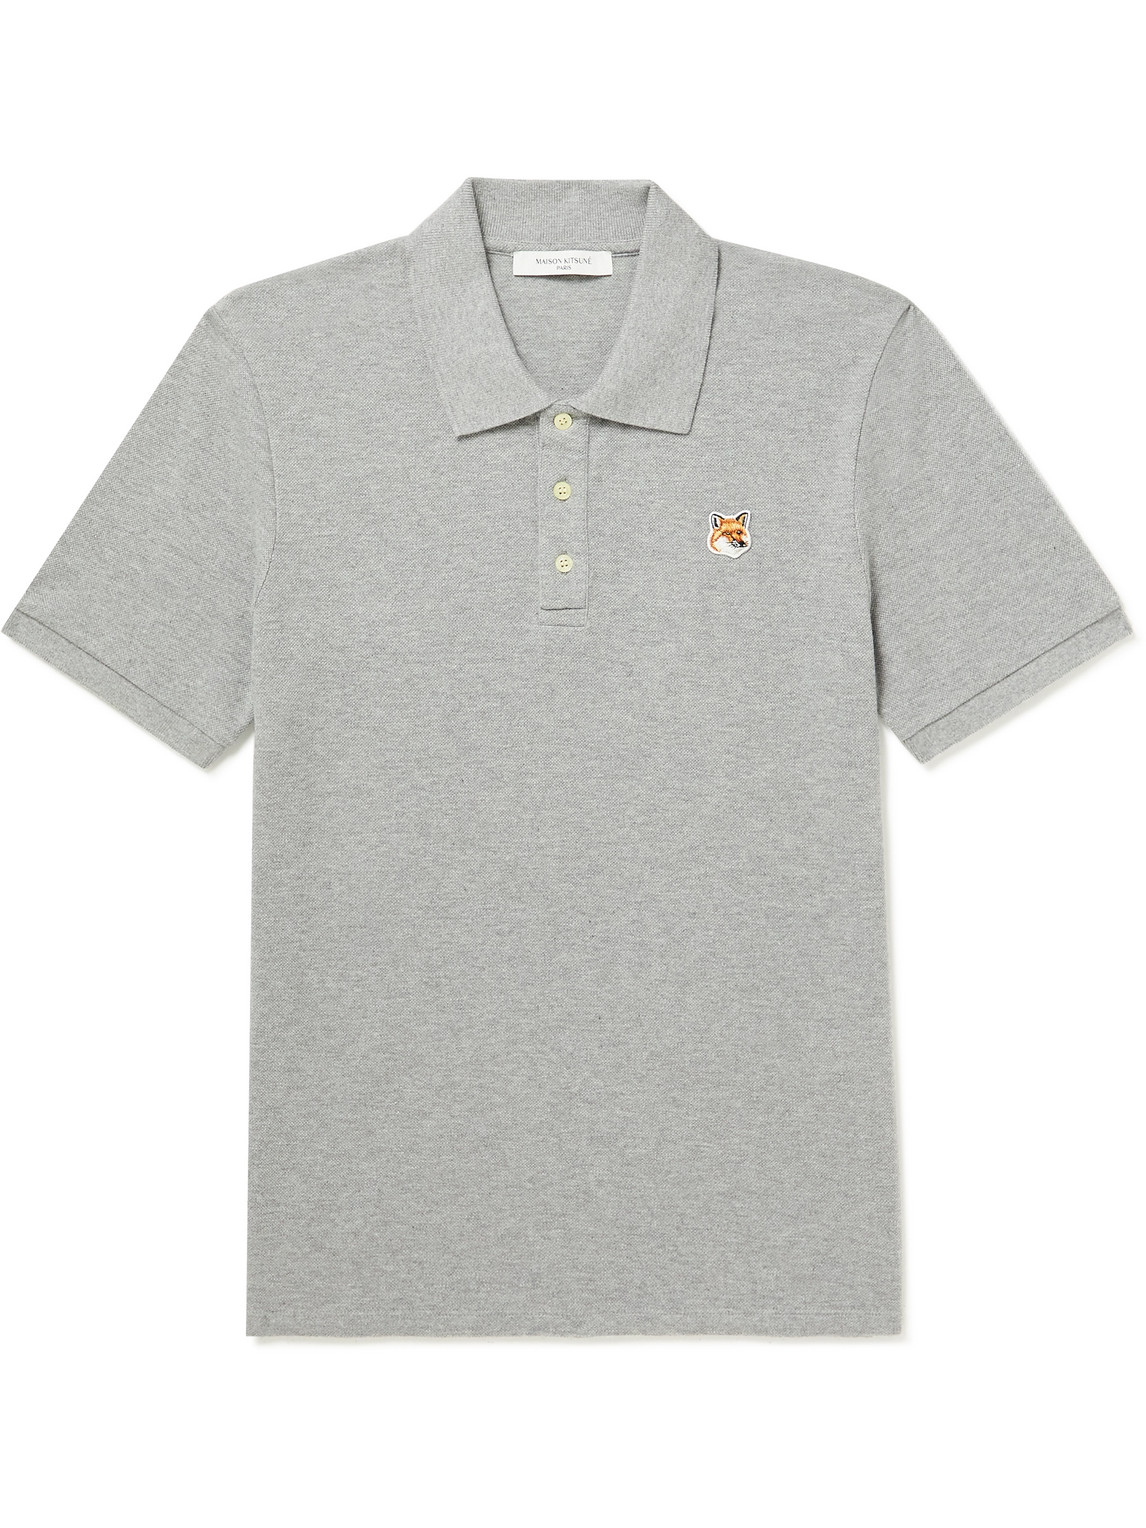 Maison Kitsuné - Logo-Appliquéd Cotton-Piqué Polo Shirt - Men - Gray - XS von Maison Kitsuné